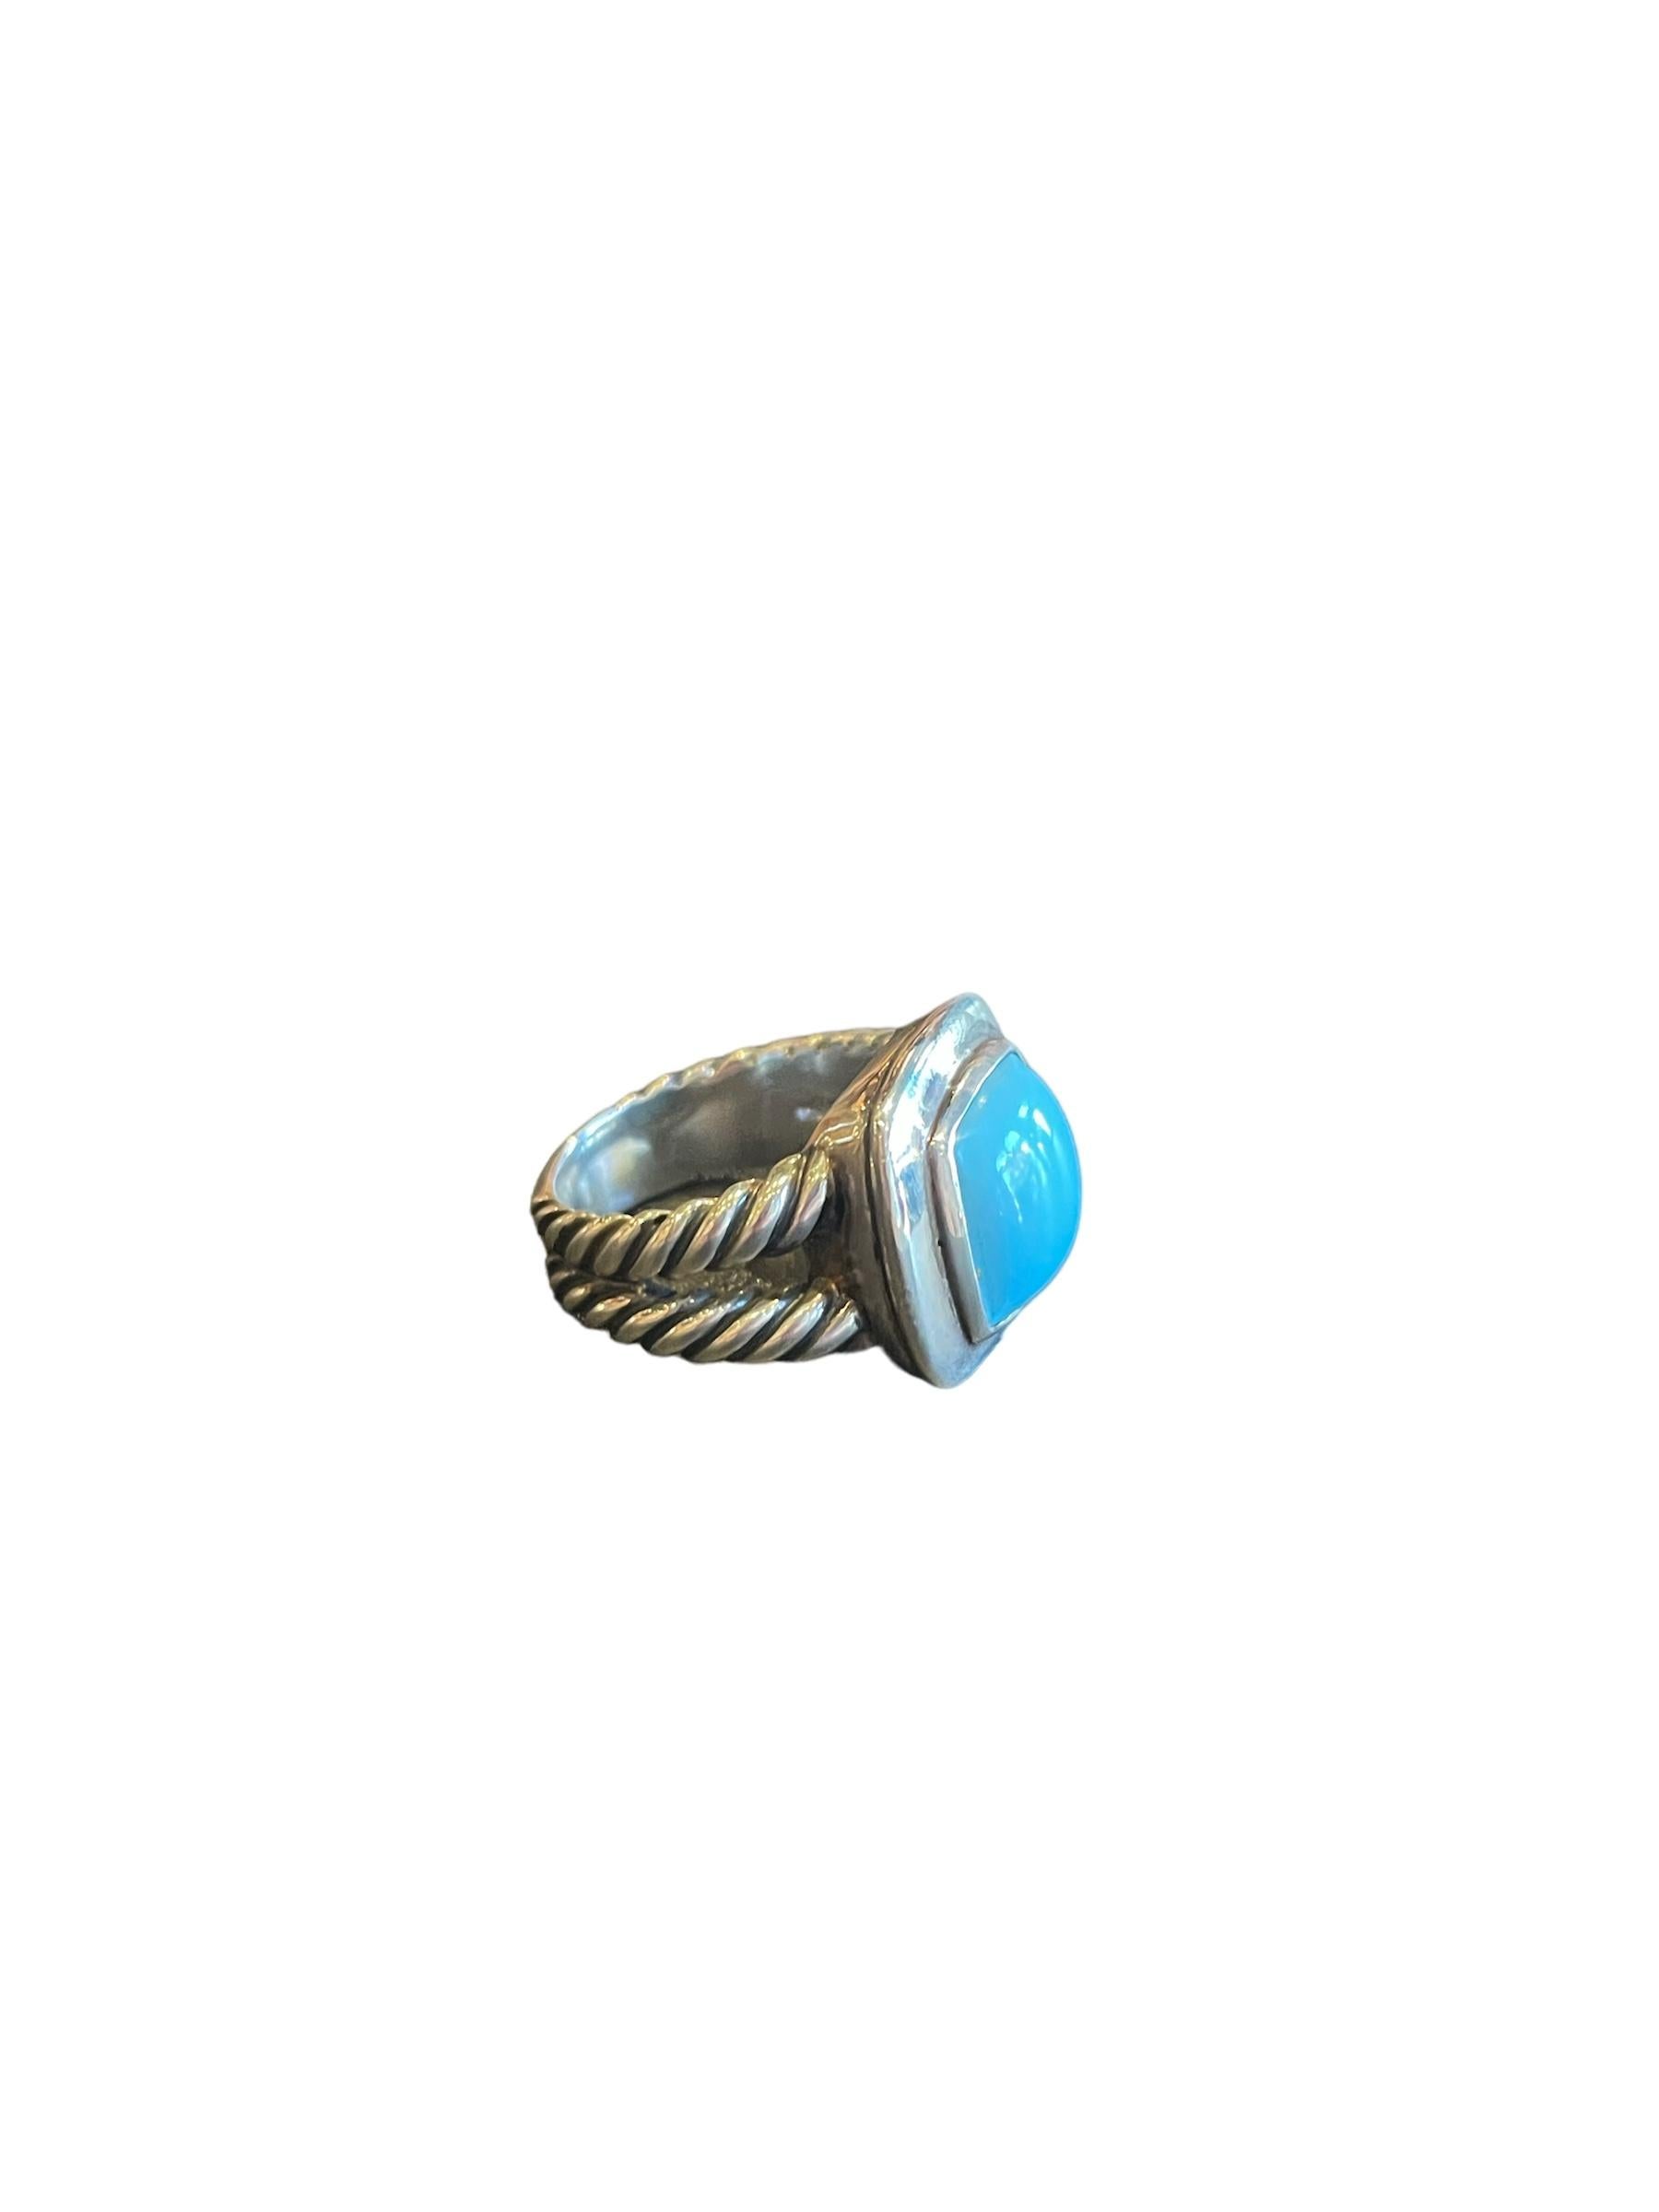 david yurman turquoise ring